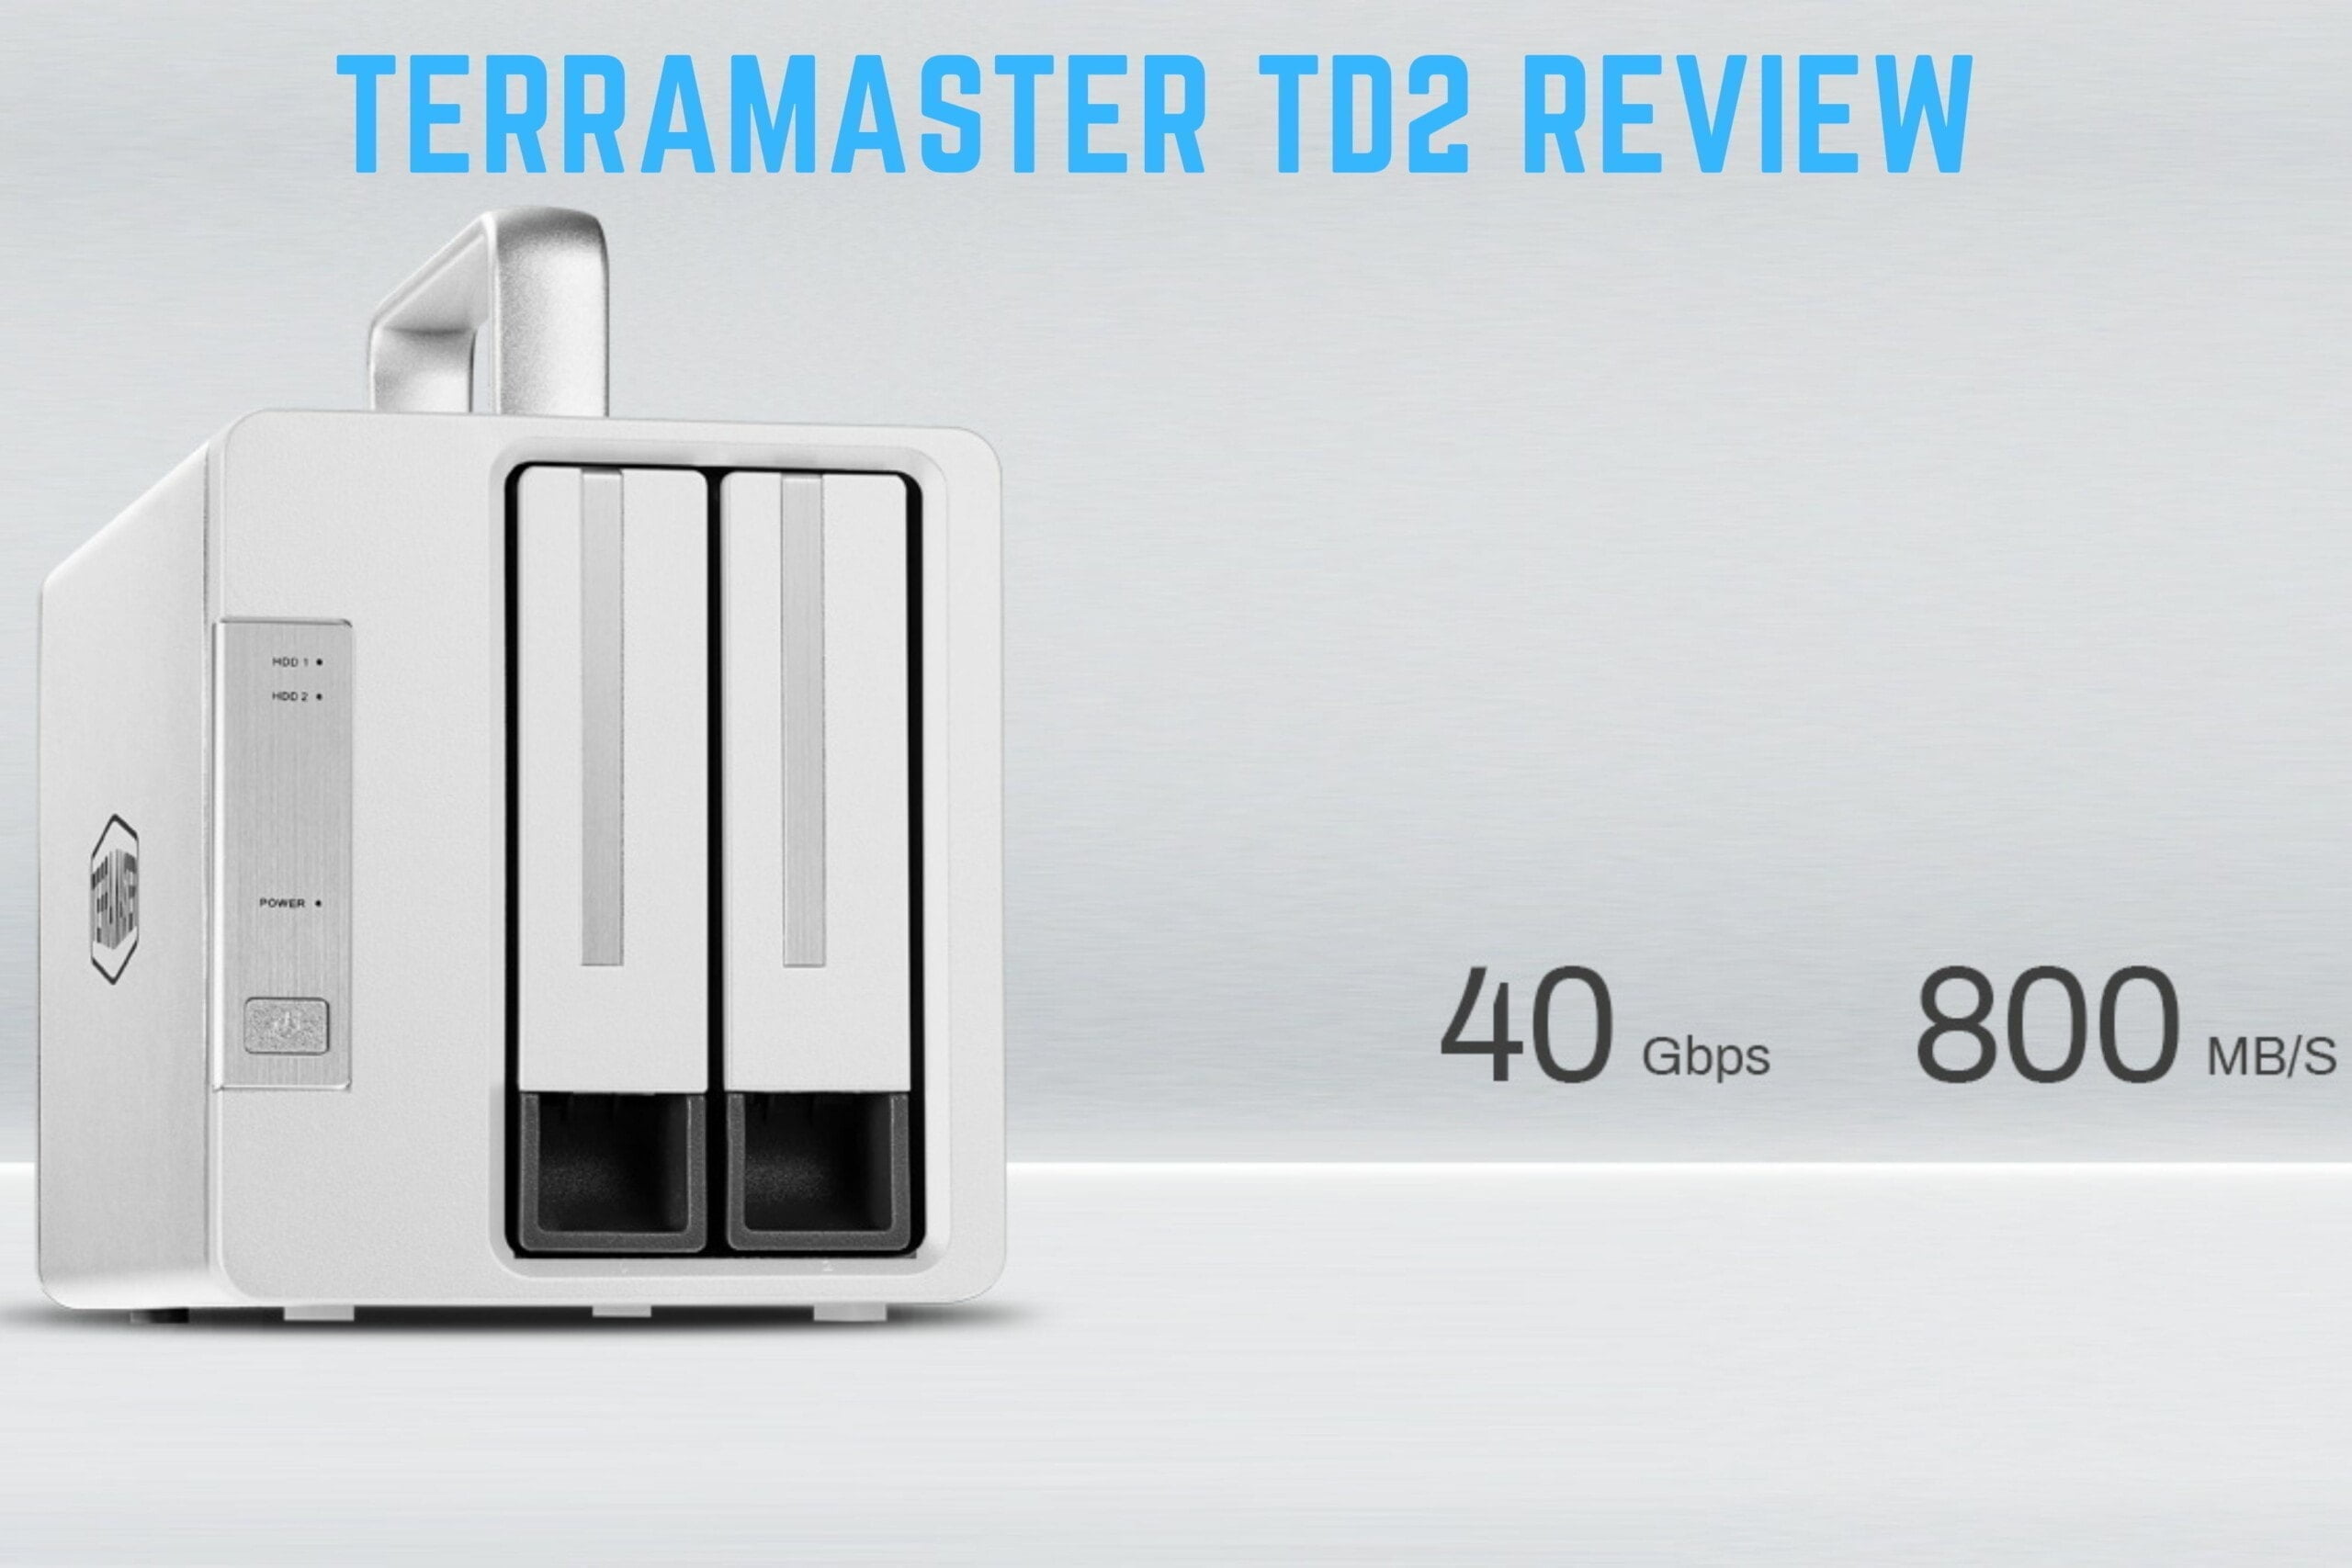 TerraMaster TD2 Thunderbolt 3 2-bay RAID DAS review